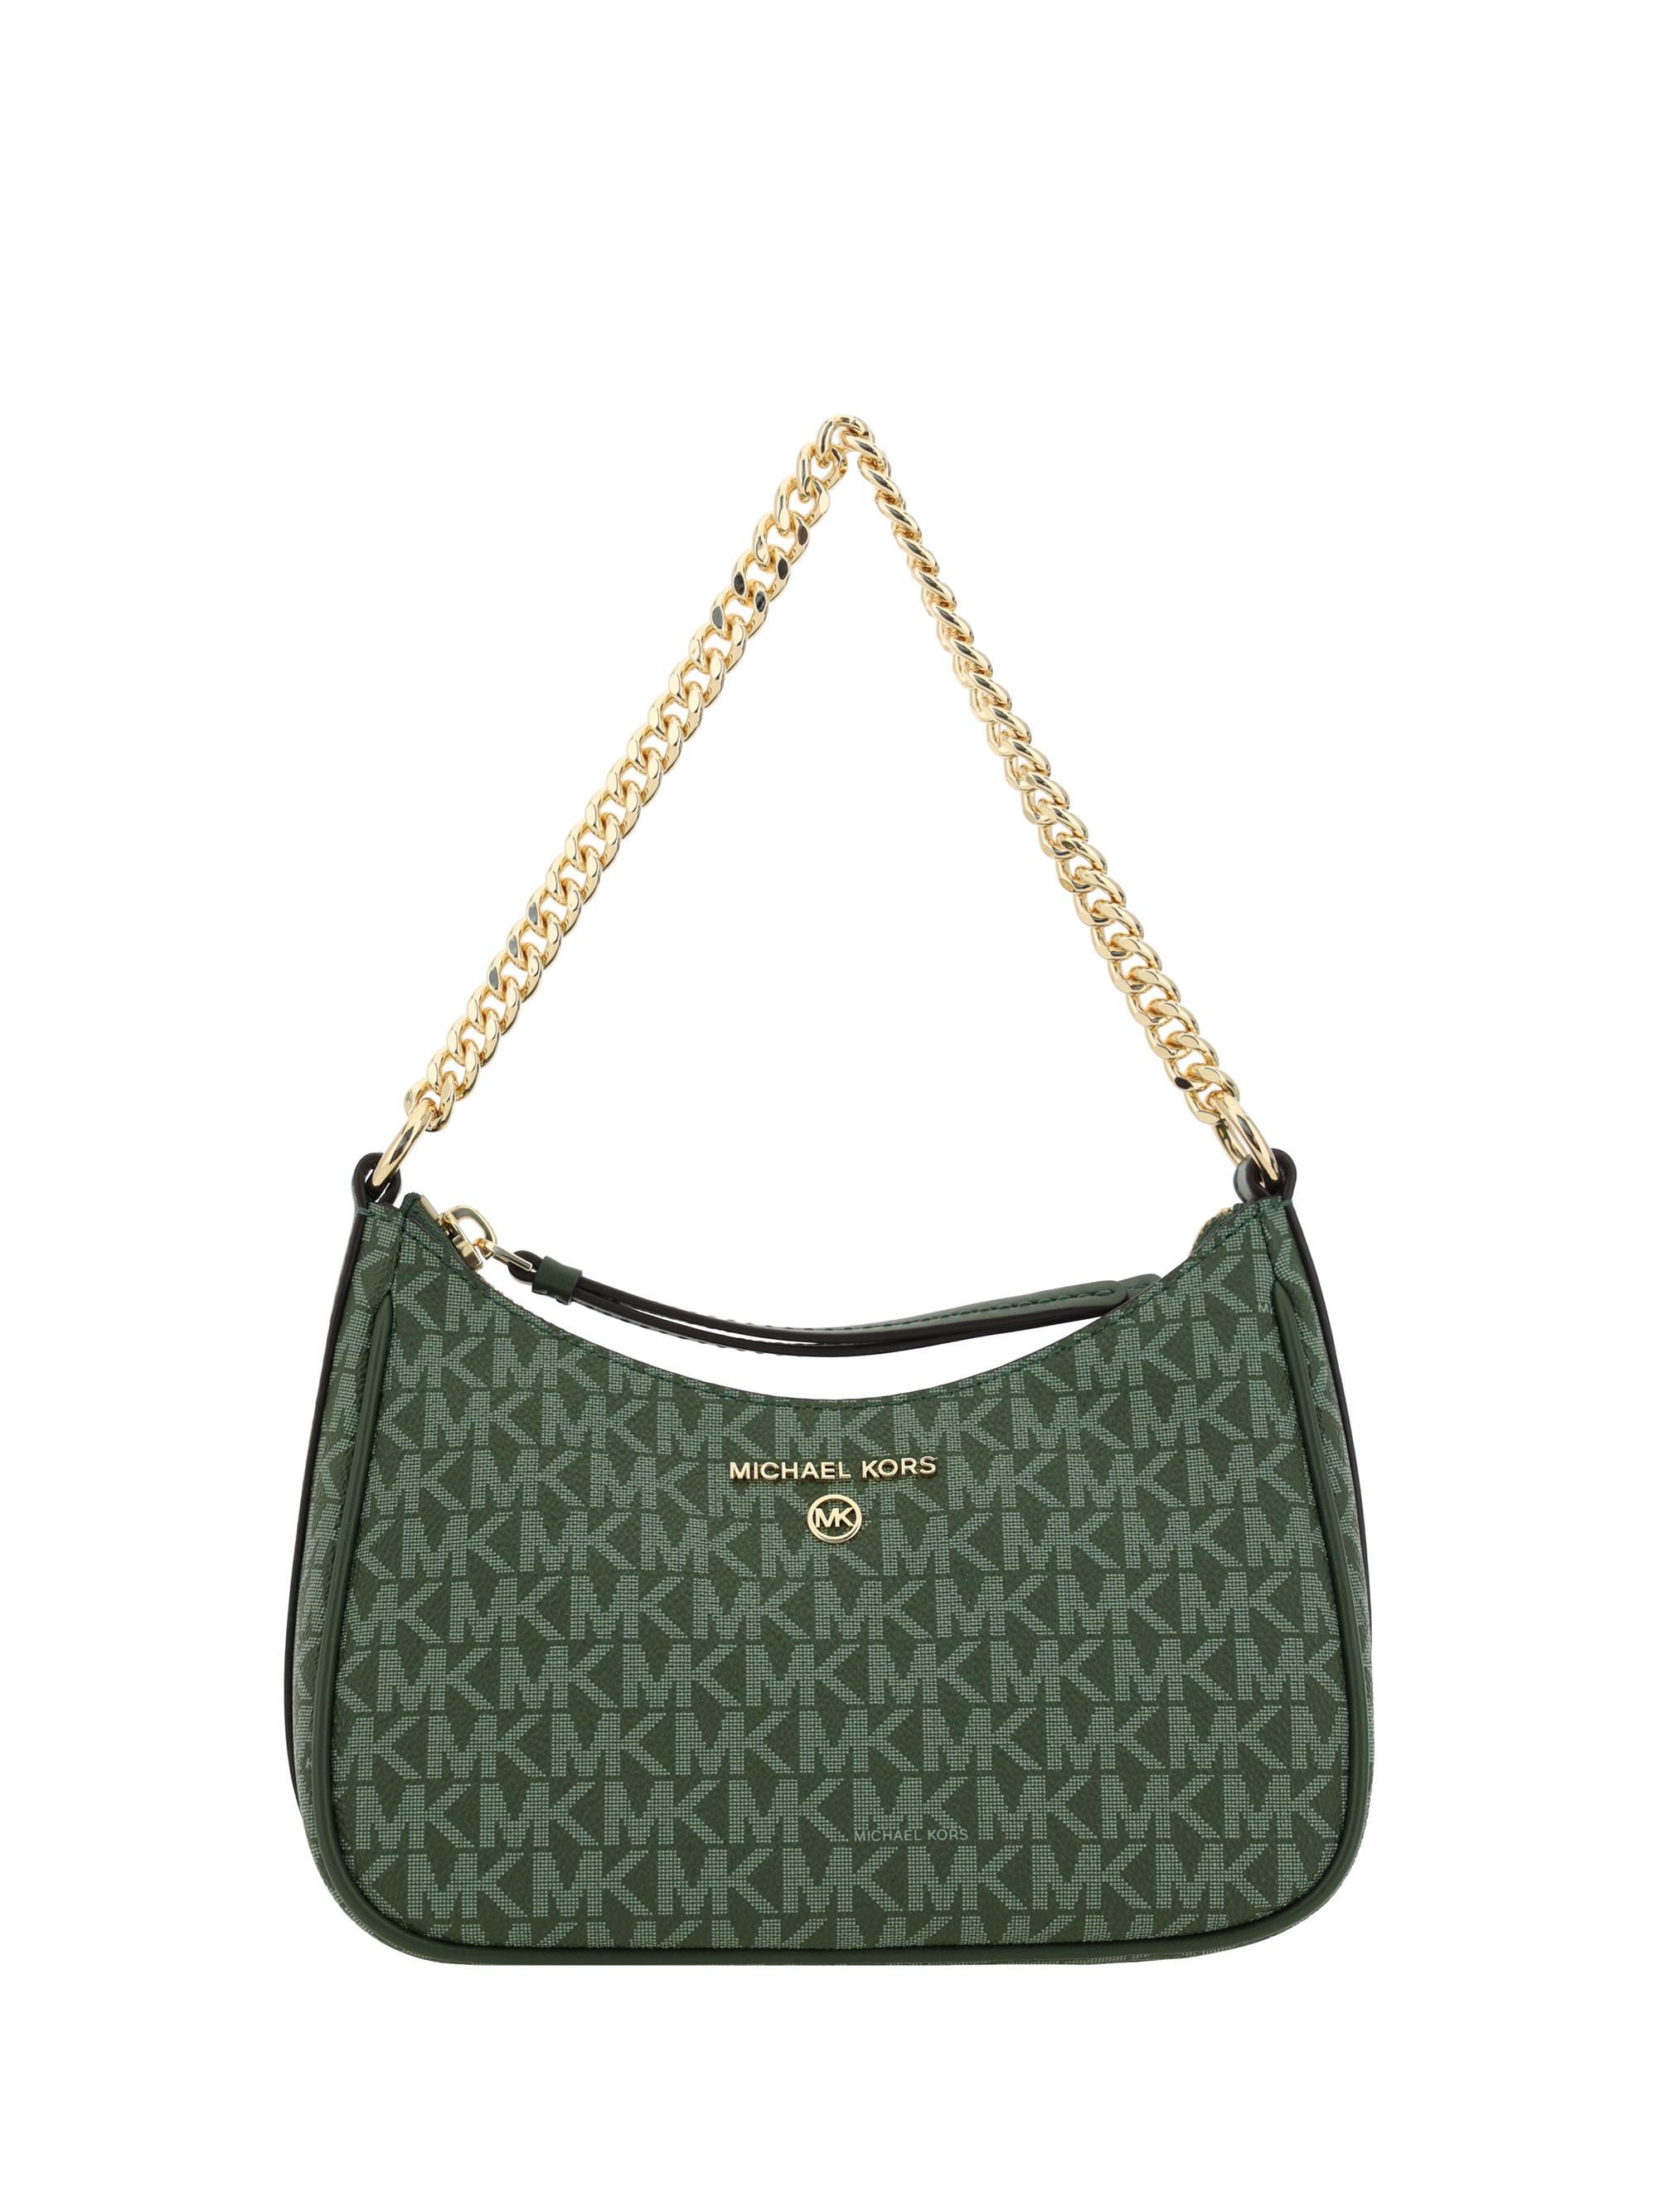 NWT Michael Kors Hamilton Small Satchel Crossbody Handbag Jewel Green  Leather | eBay